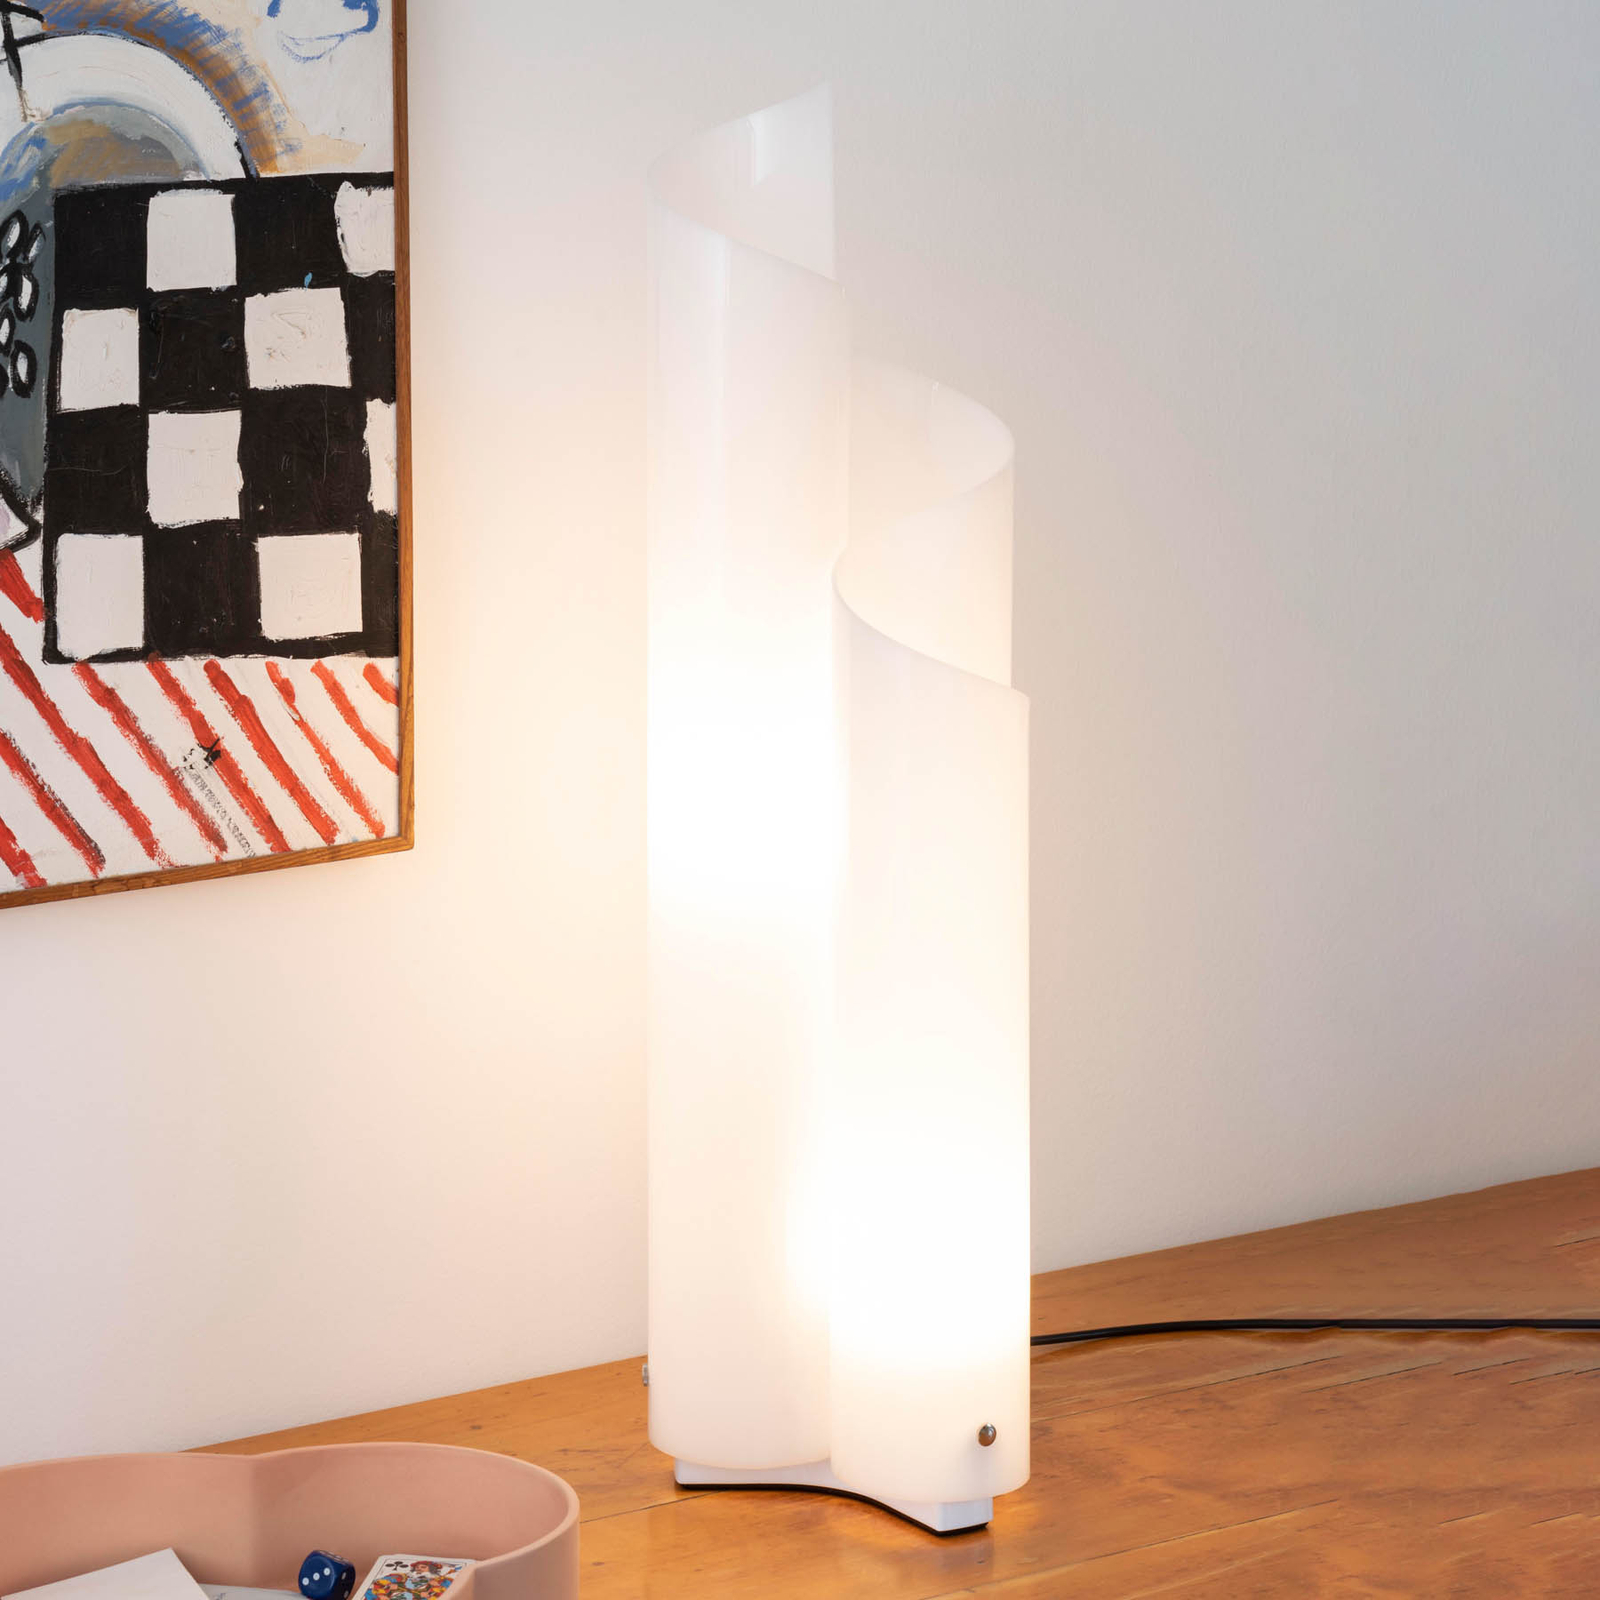 Artemide Mezzachimera floor lamp, wave-like design